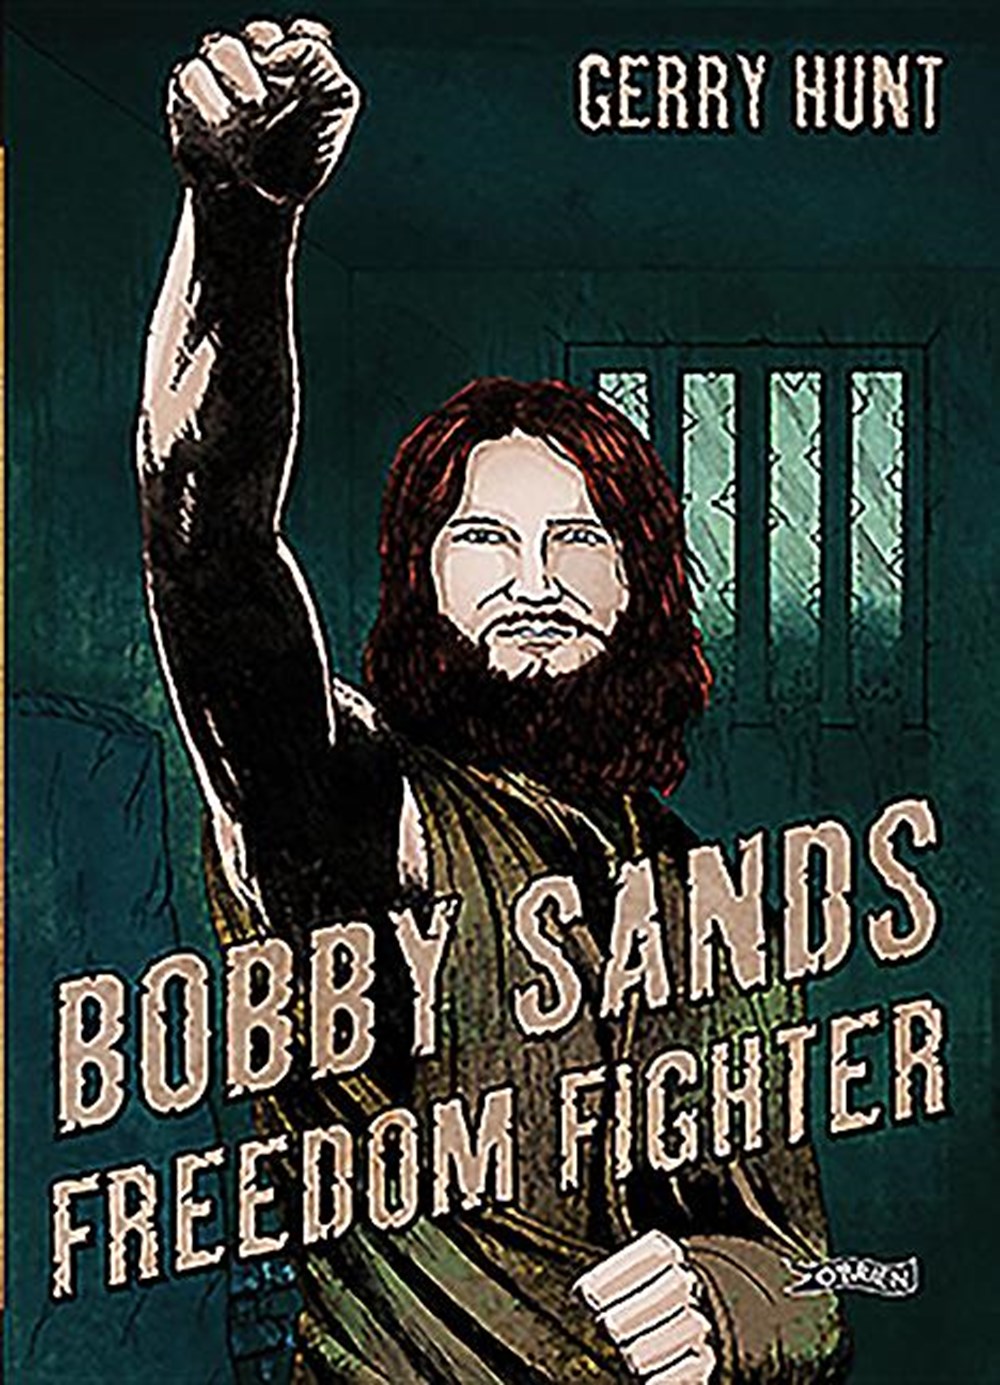 Bobby Sands Freedom Fighter